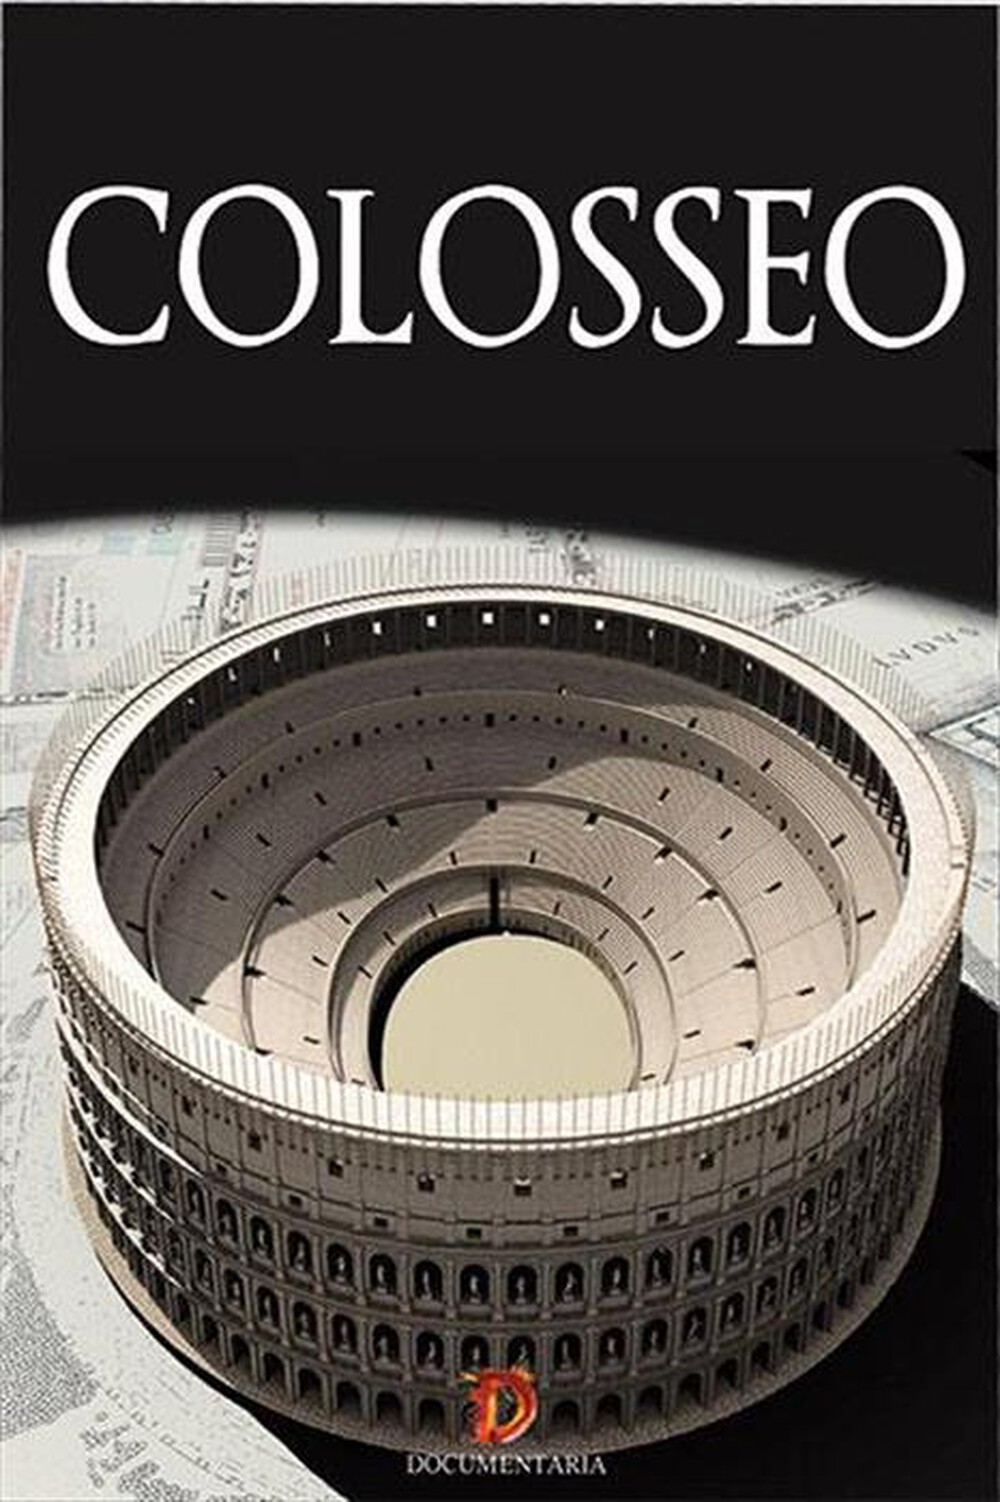 "CINEHOLLYWOOD - Colosseo"